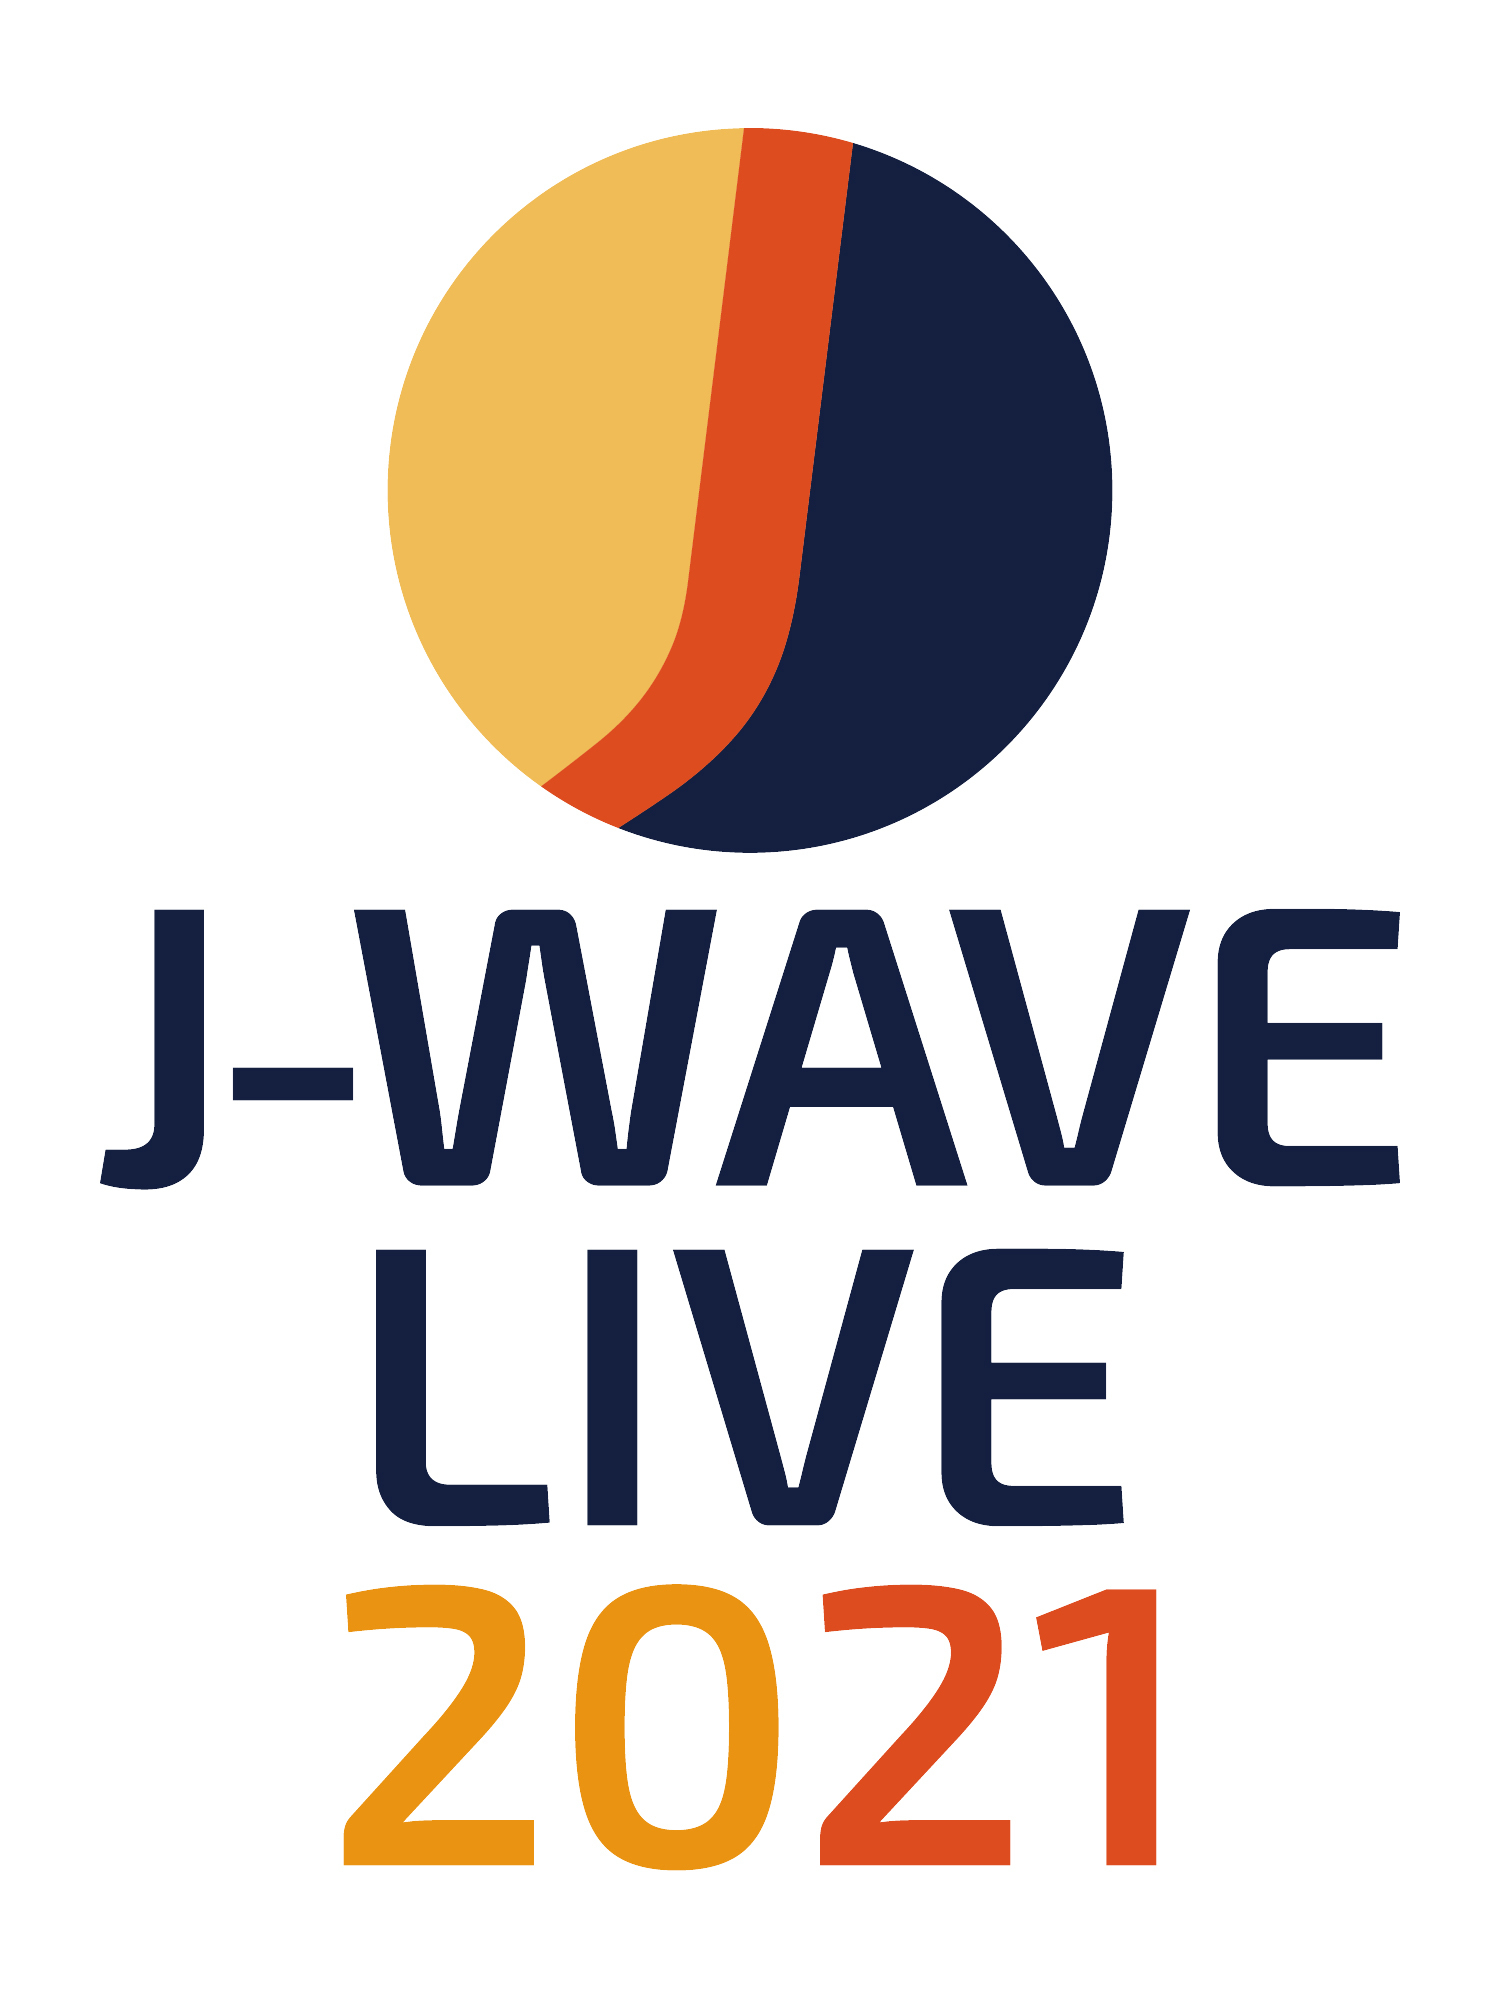 J Wave Live 21 オープニング アクトにdoulとeillの出演が決定 両日のタイムテーブル 枠 を発表 さらに当日 会場からの番組生放送情報やライブ映像の事後配信チケット販売情報も J Wave 81 3fm のプレスリリース